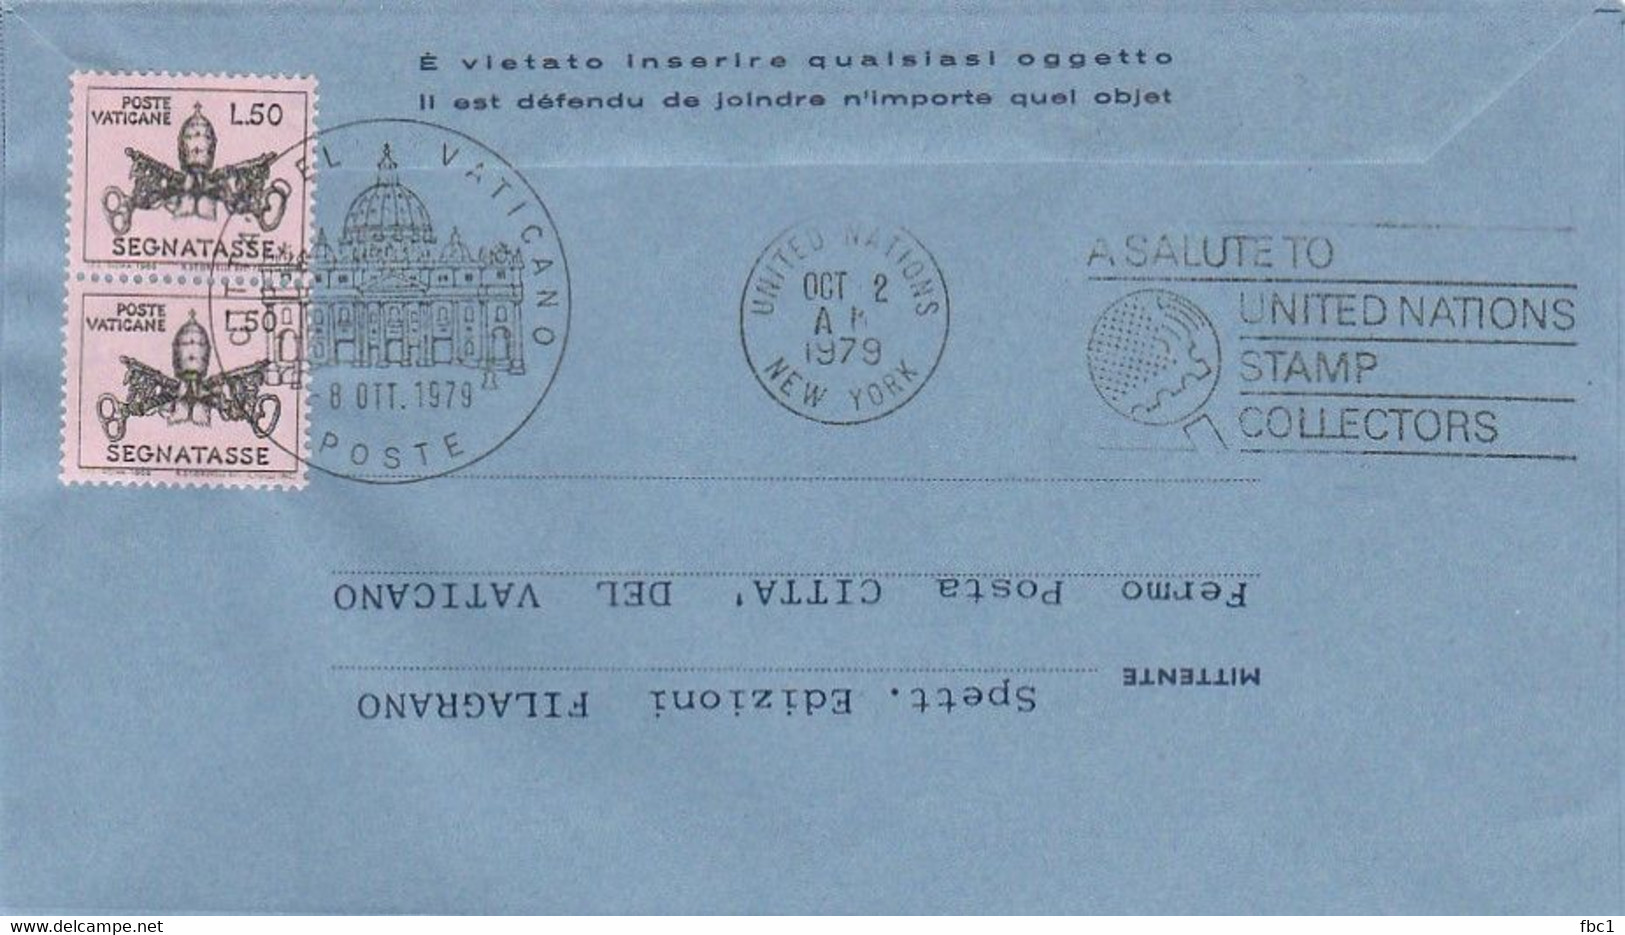 Vatican - Aérogramme 1979 - Voyage Du Pâpe Jean-Paul II En Irlande - USA Et ONU - Franking Machines (EMA)